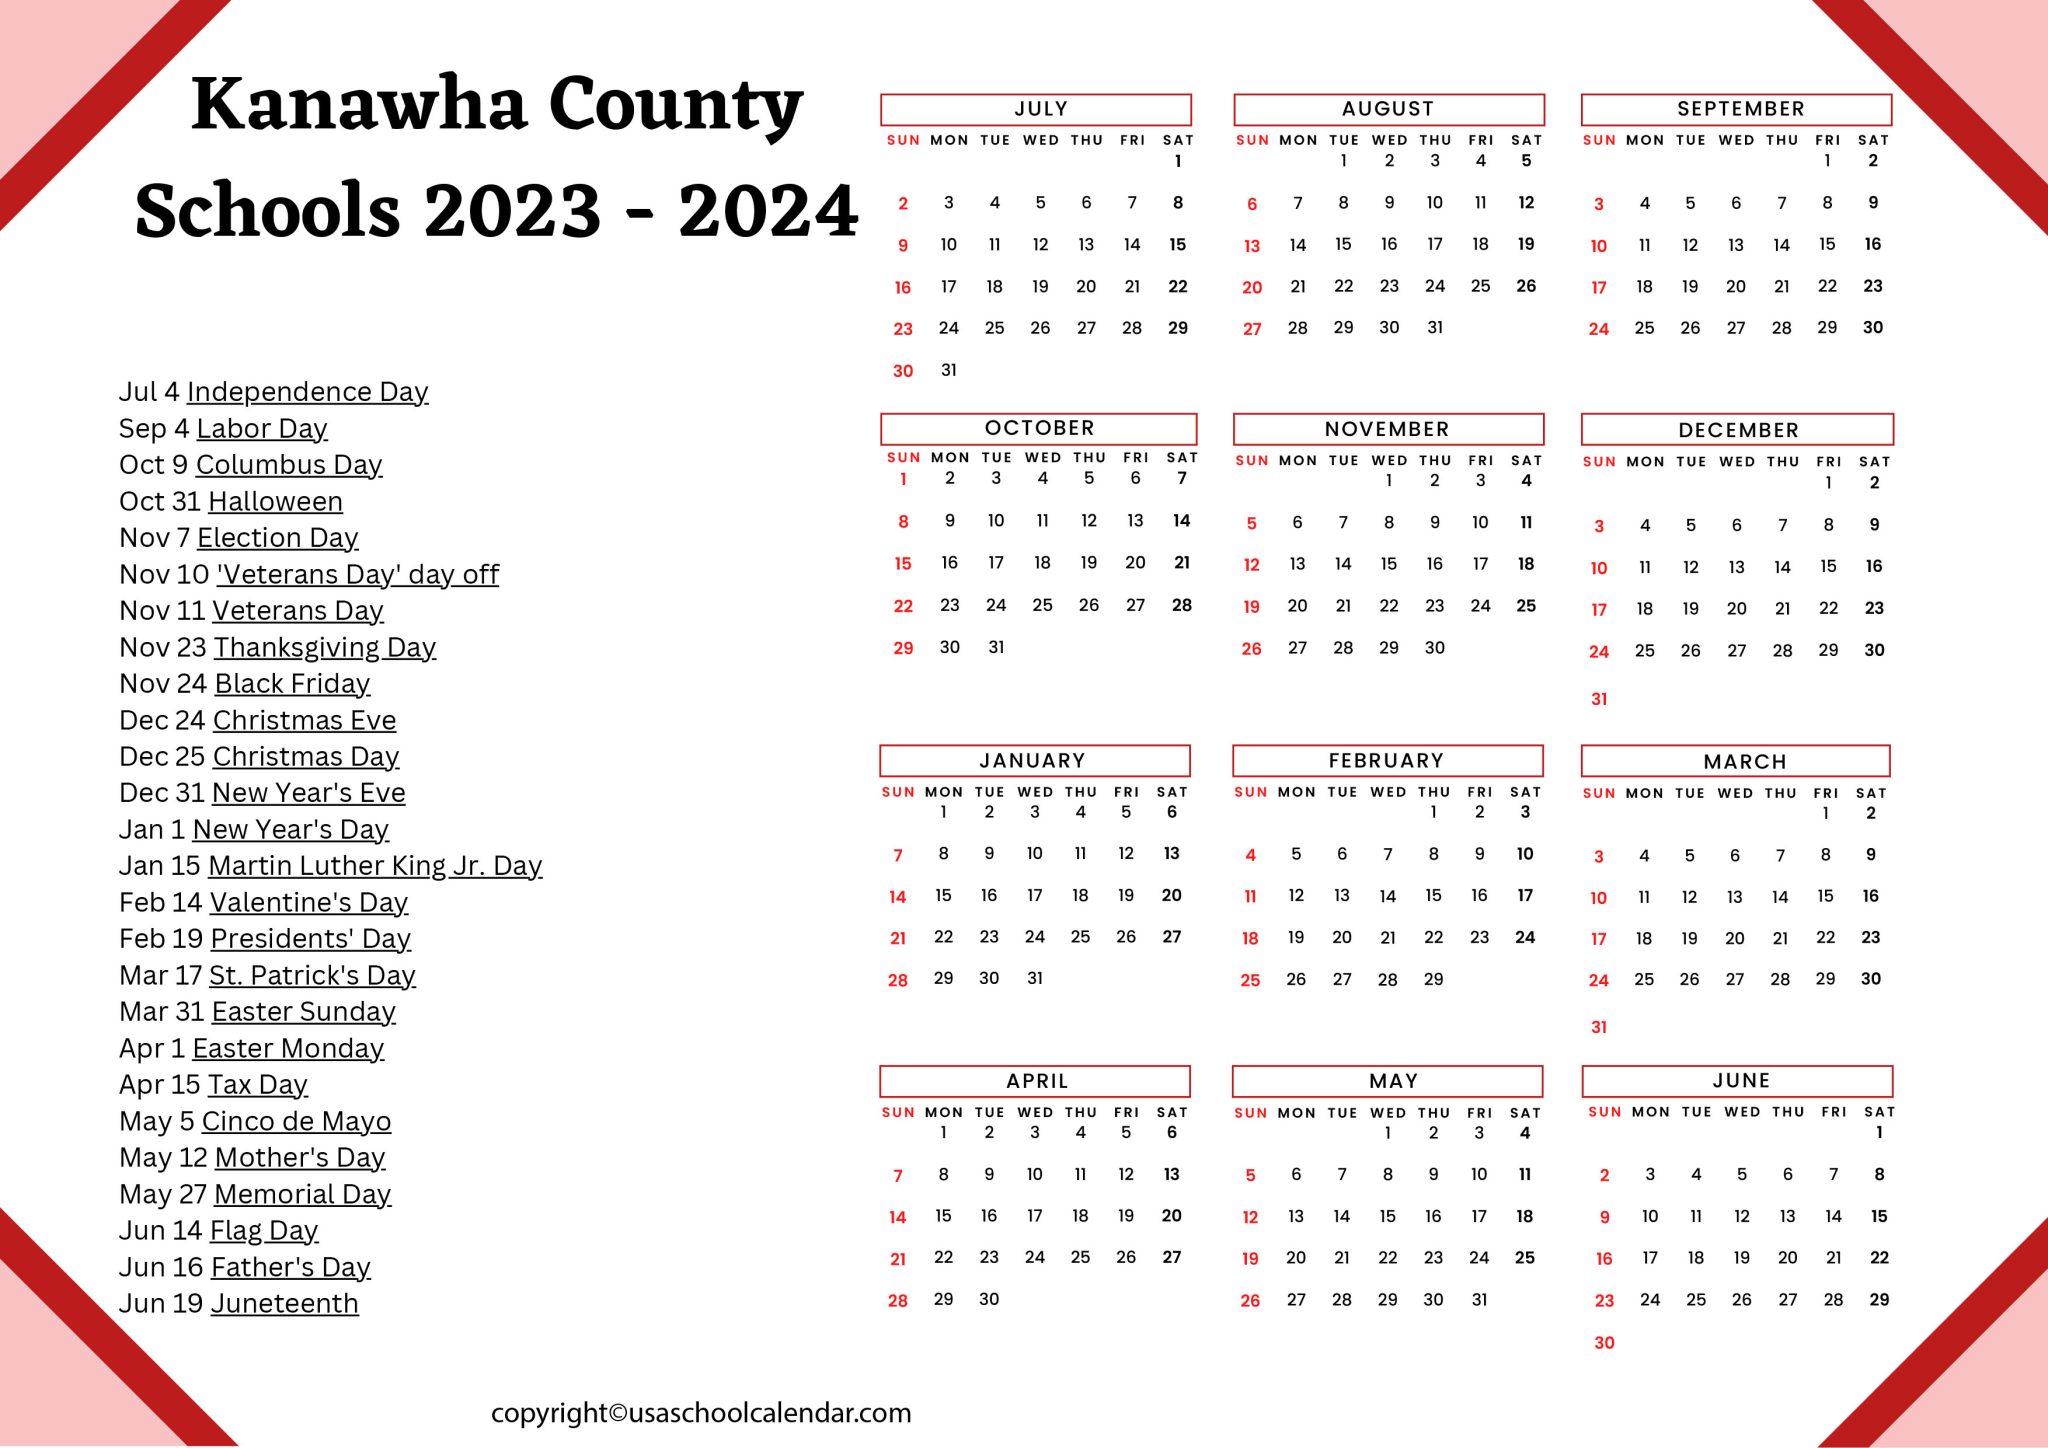 Kanawha County Schools Calendar 1 2048x1448 